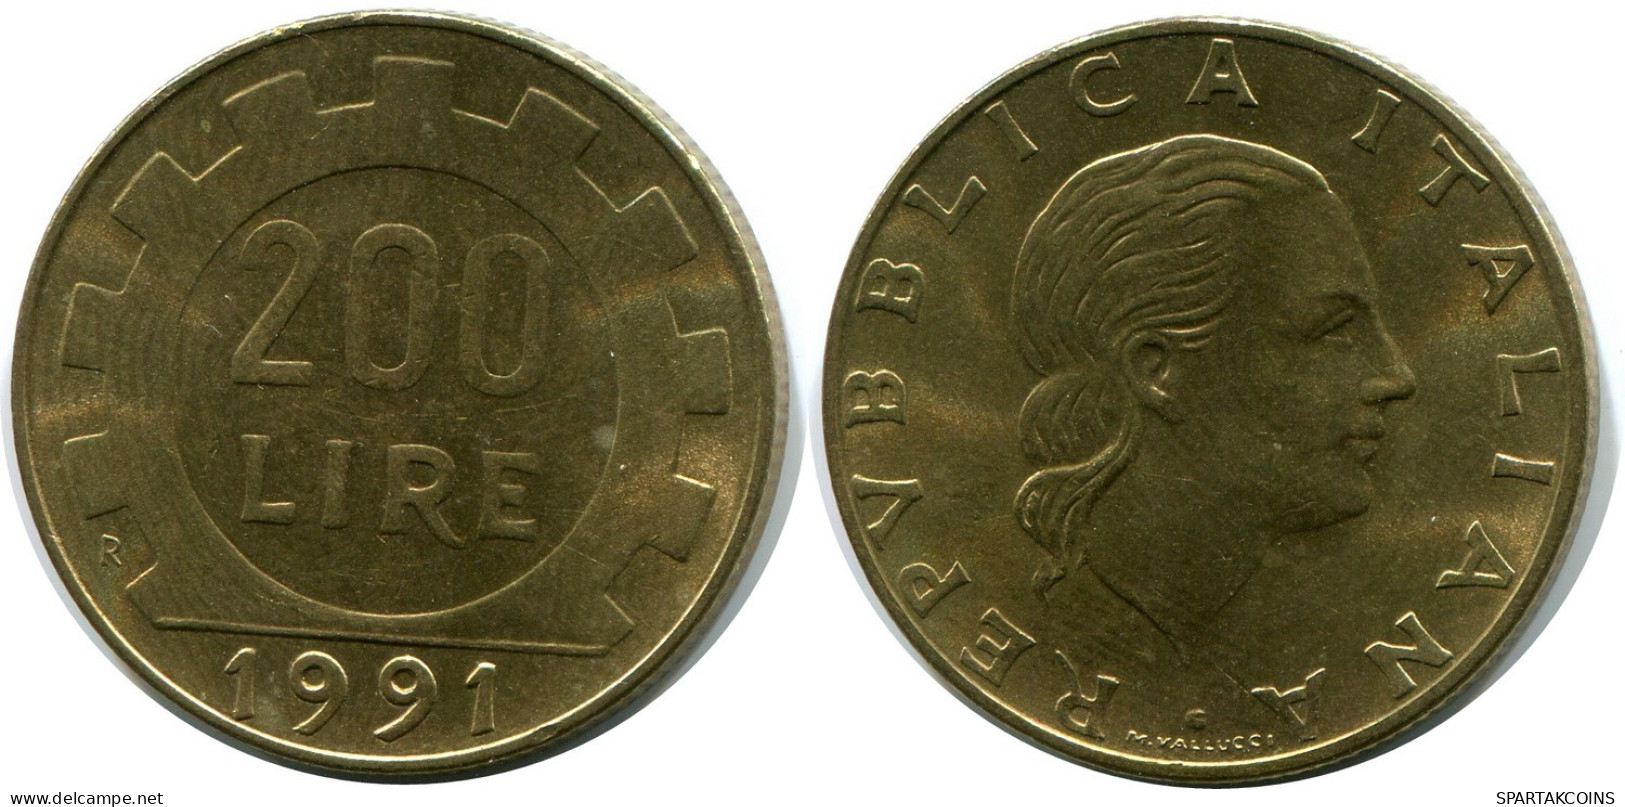 200 LIRE 1991 ITALY Coin #AZ513.U.A - 200 Lire